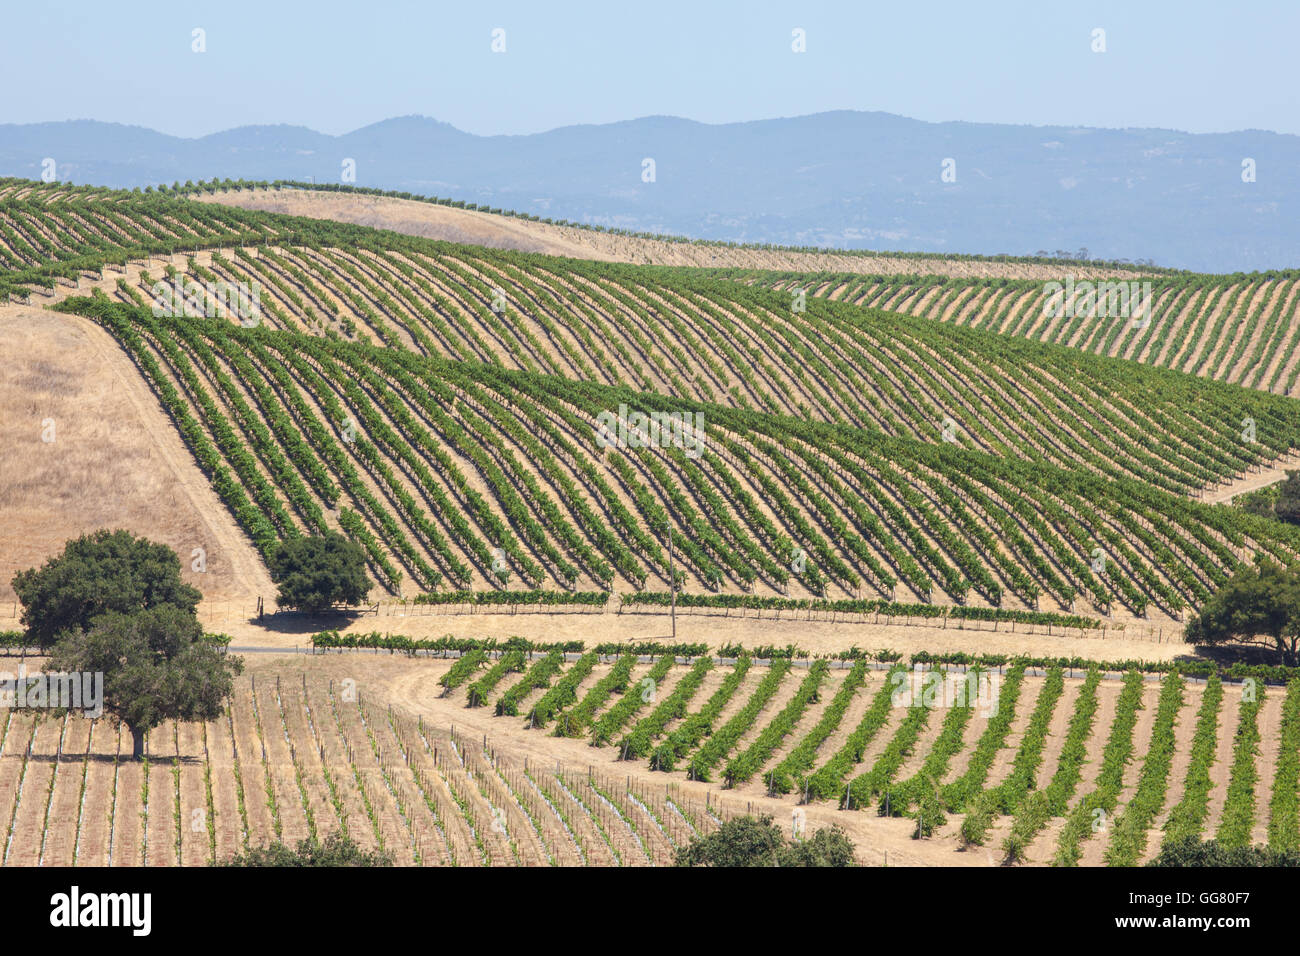 View from Artesa Vineyards & Winery, Napa Valley vineyards abstract Stock Photo